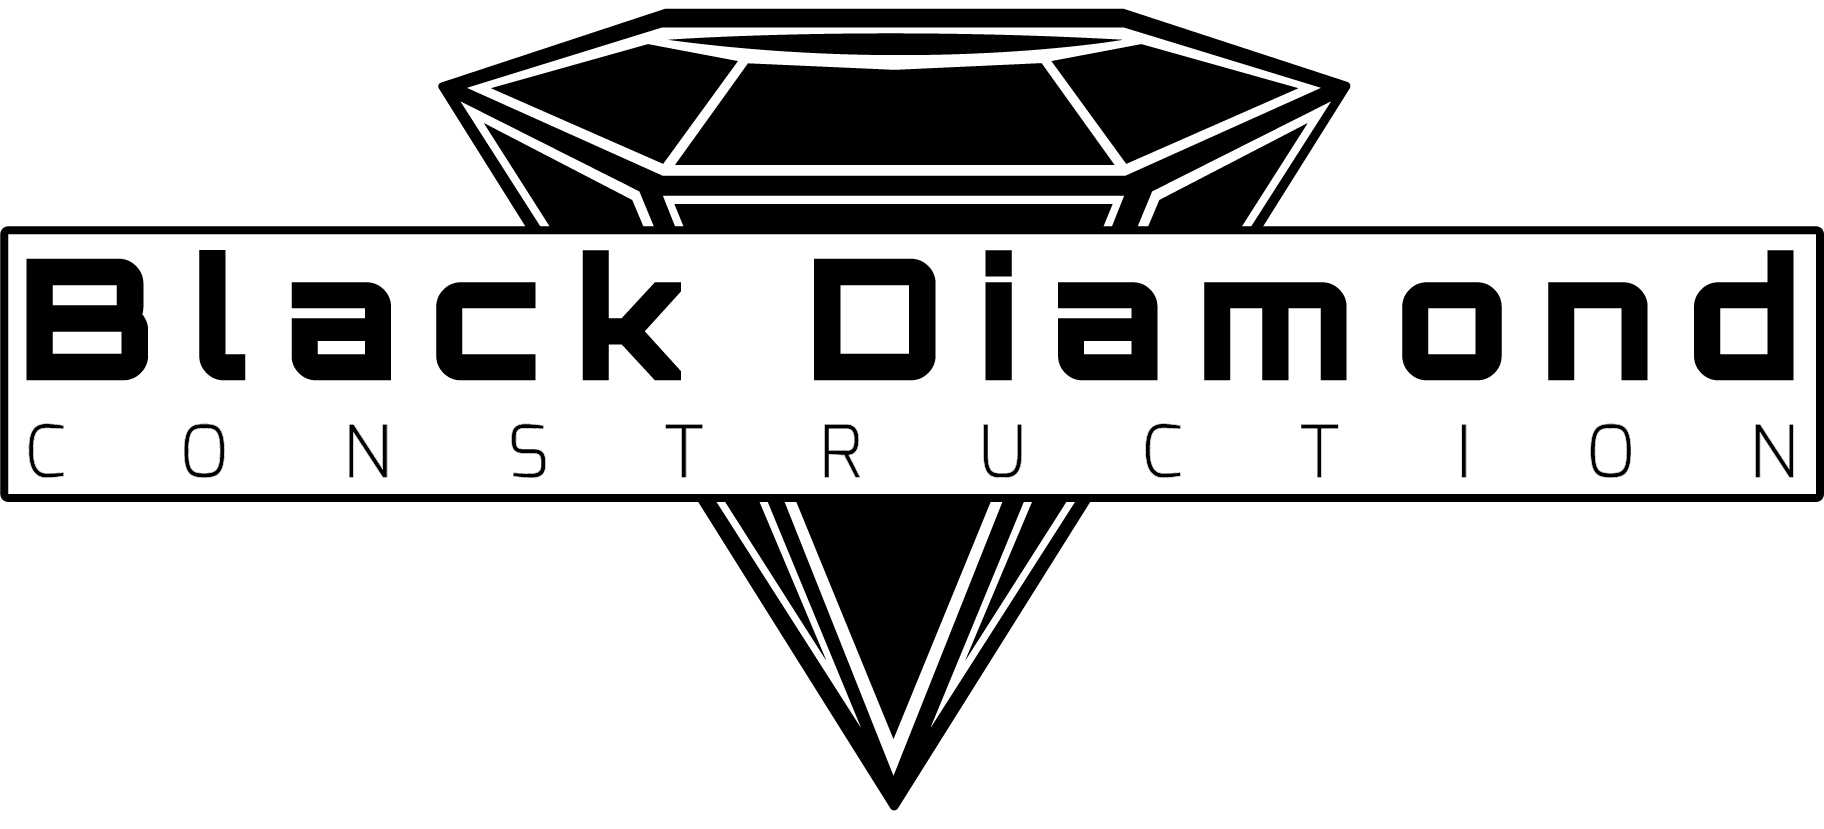 Black Diamond Construction (1824x829), Png Download